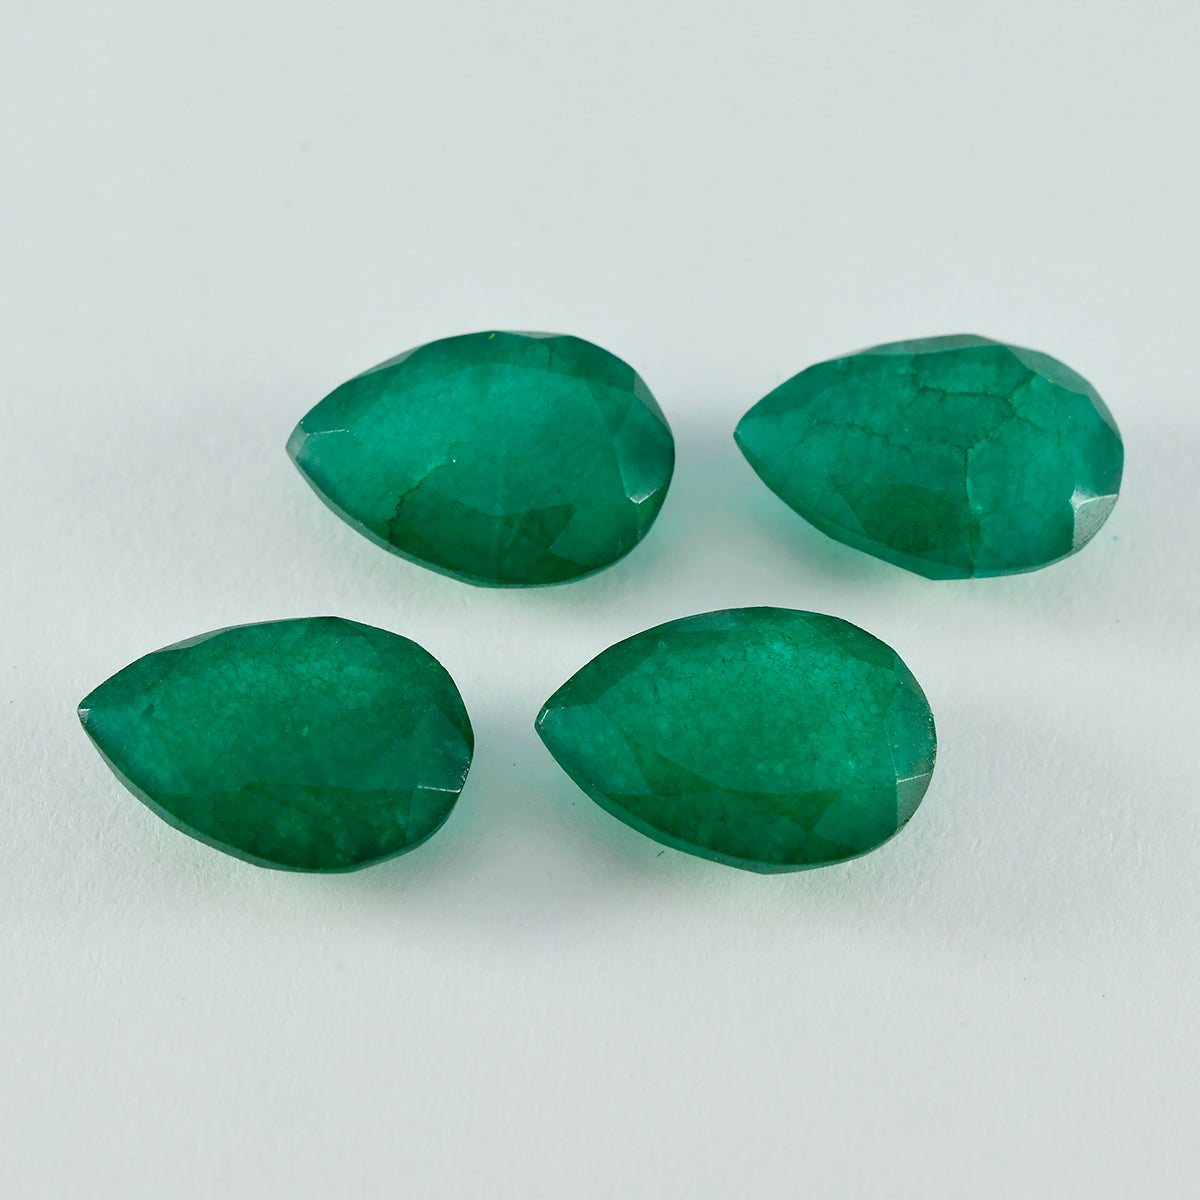 Riyogems 1PC Real Green Jasper Faceted 9x13 mm Pear Shape A+ Quality Loose Gems